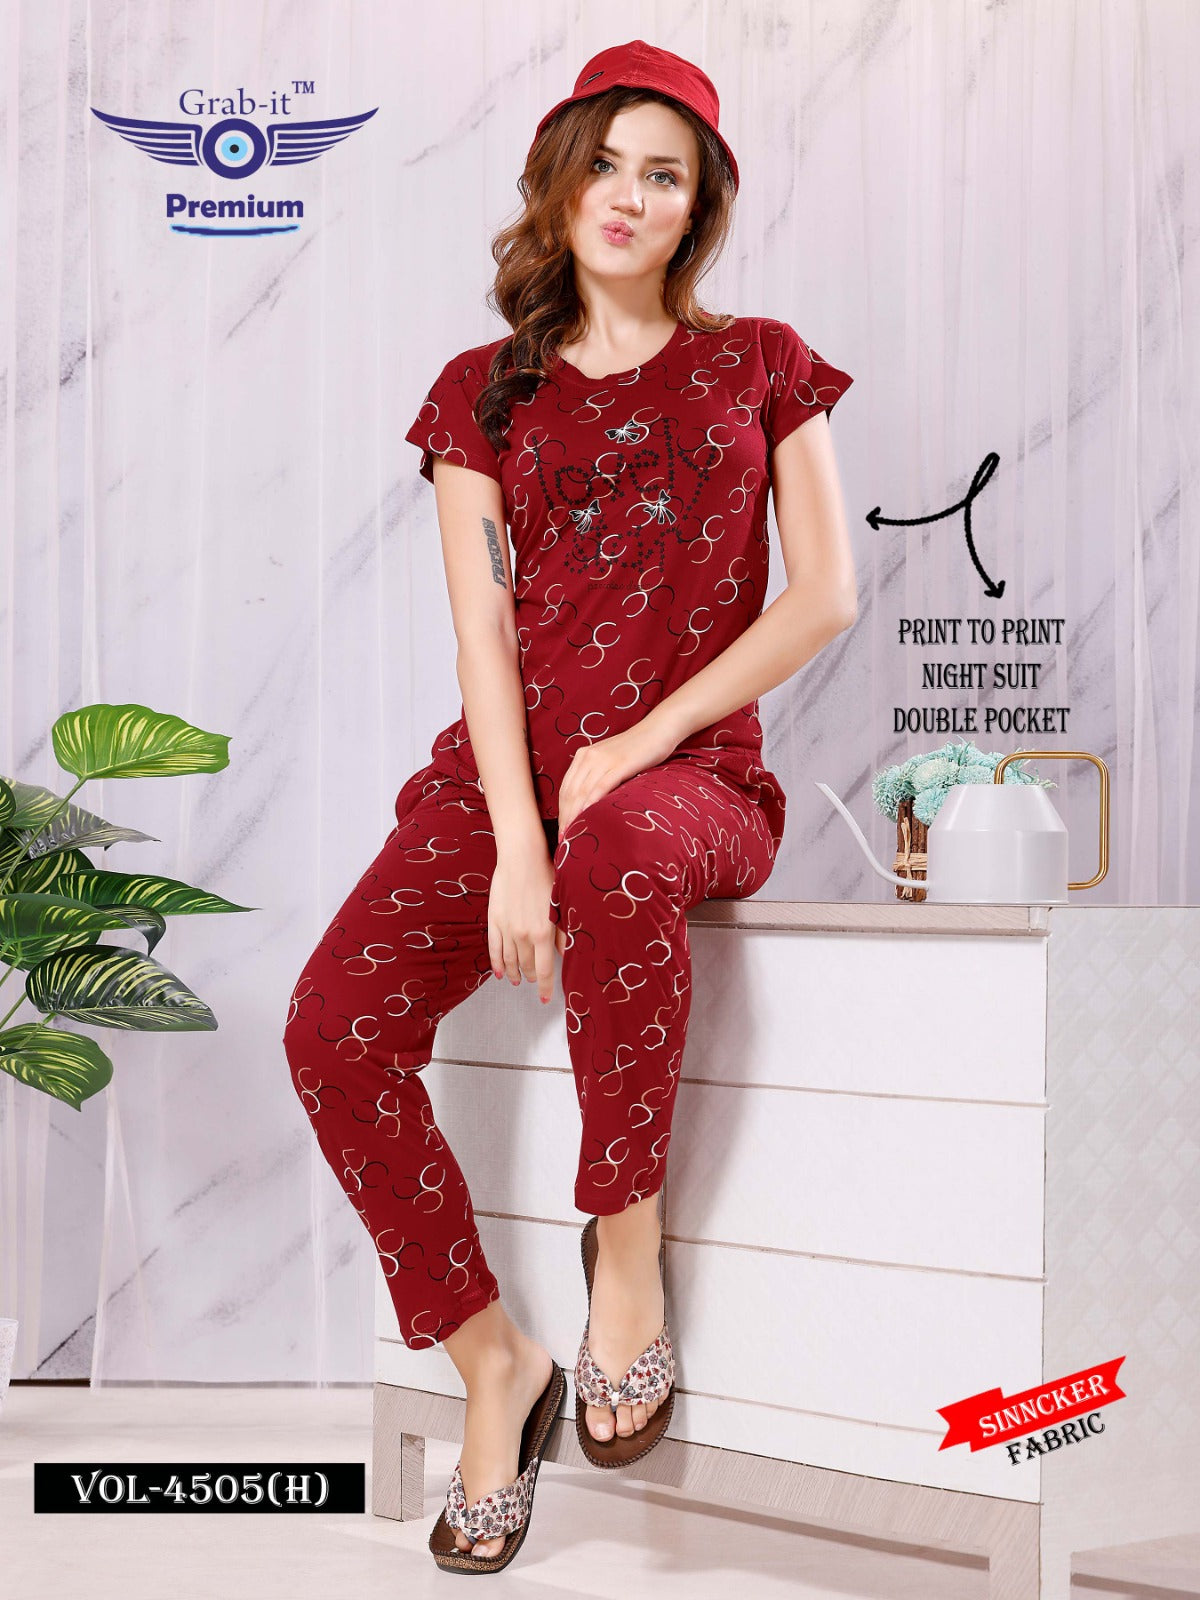 4505 H Grab It Sincker Pyjama Night Suits Manufacturer Gujarat